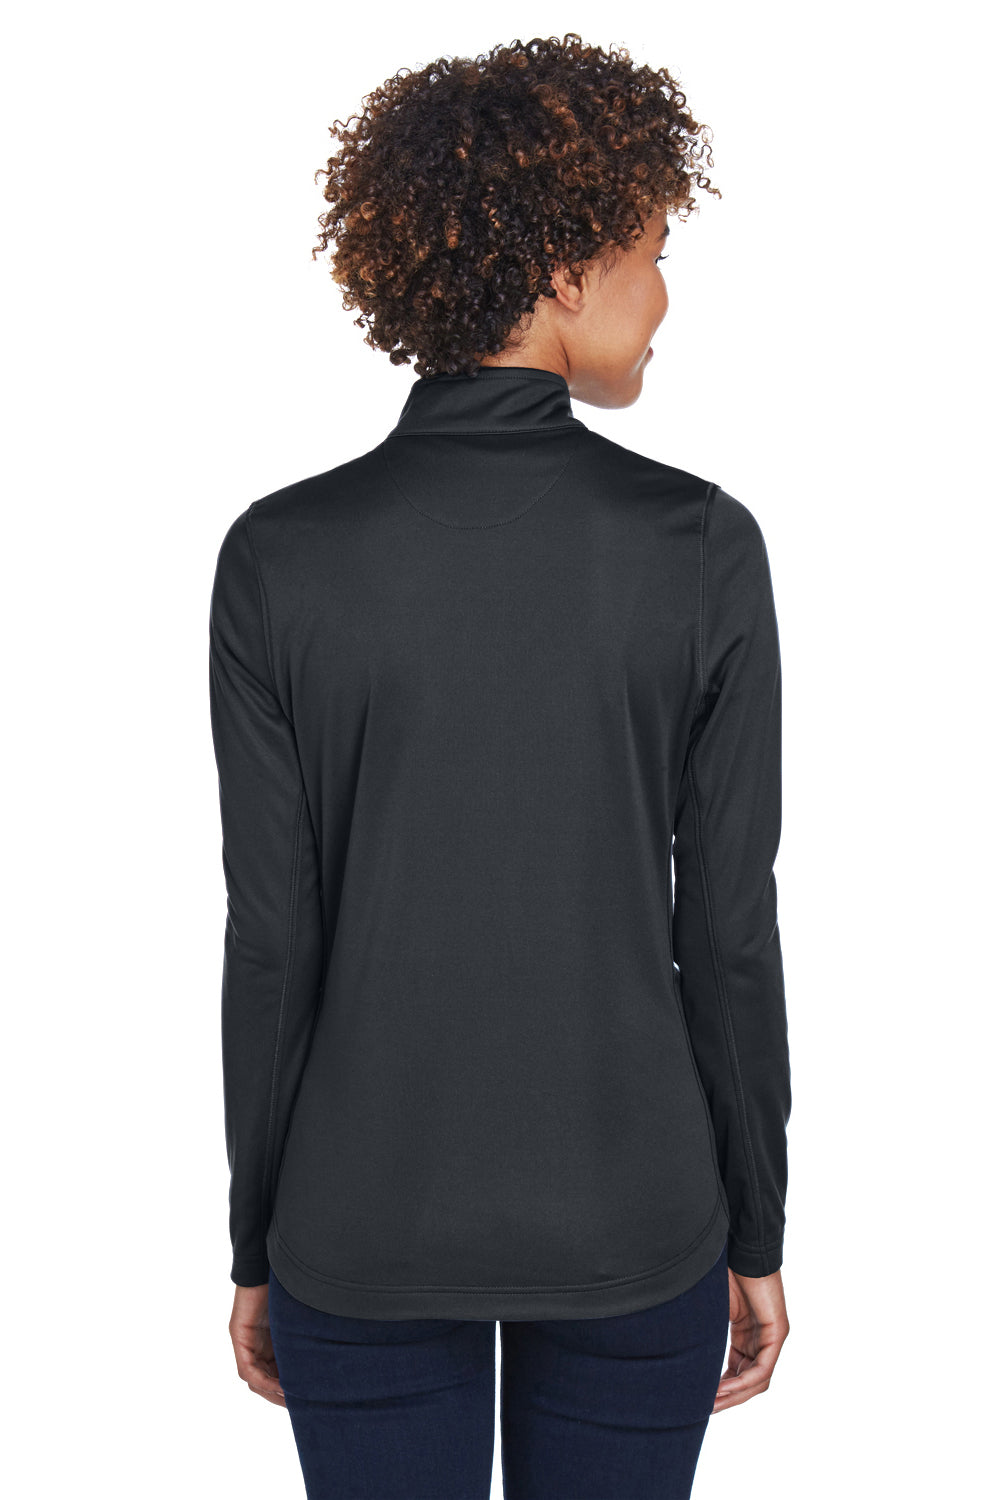 UltraClub 8230L Womens Cool & Dry Moisture Wicking 1/4 Zip Sweatshirt Black Back